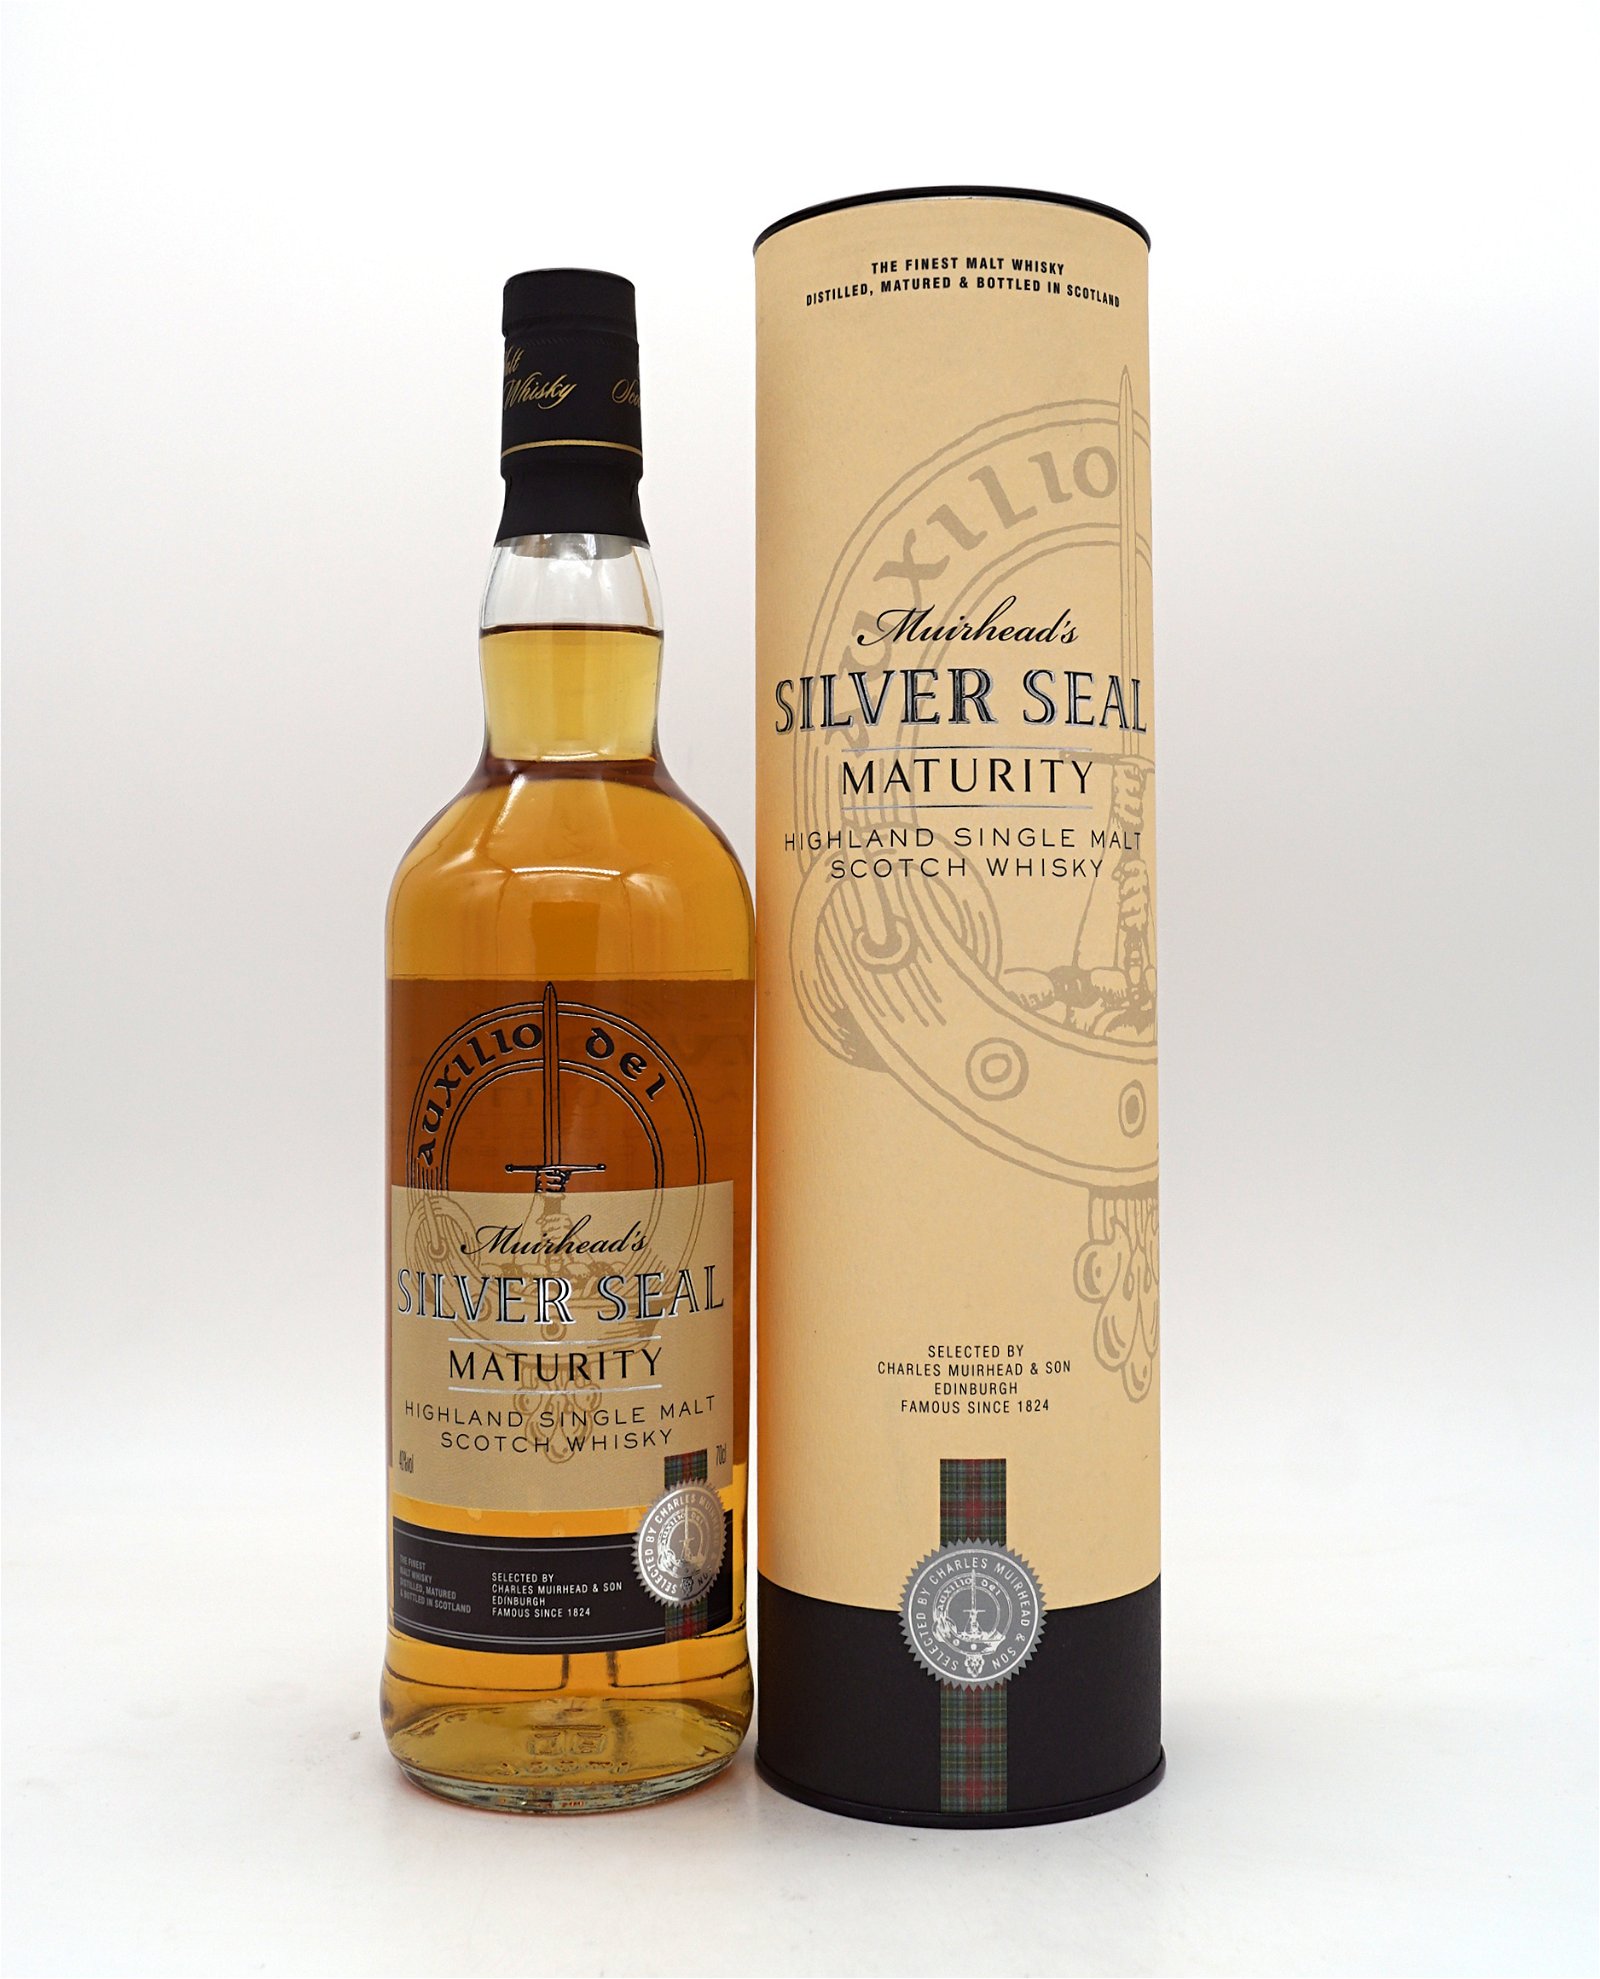 Muirhead's Silver Seal Maturity Highland Single Malt Scotch Whisky 